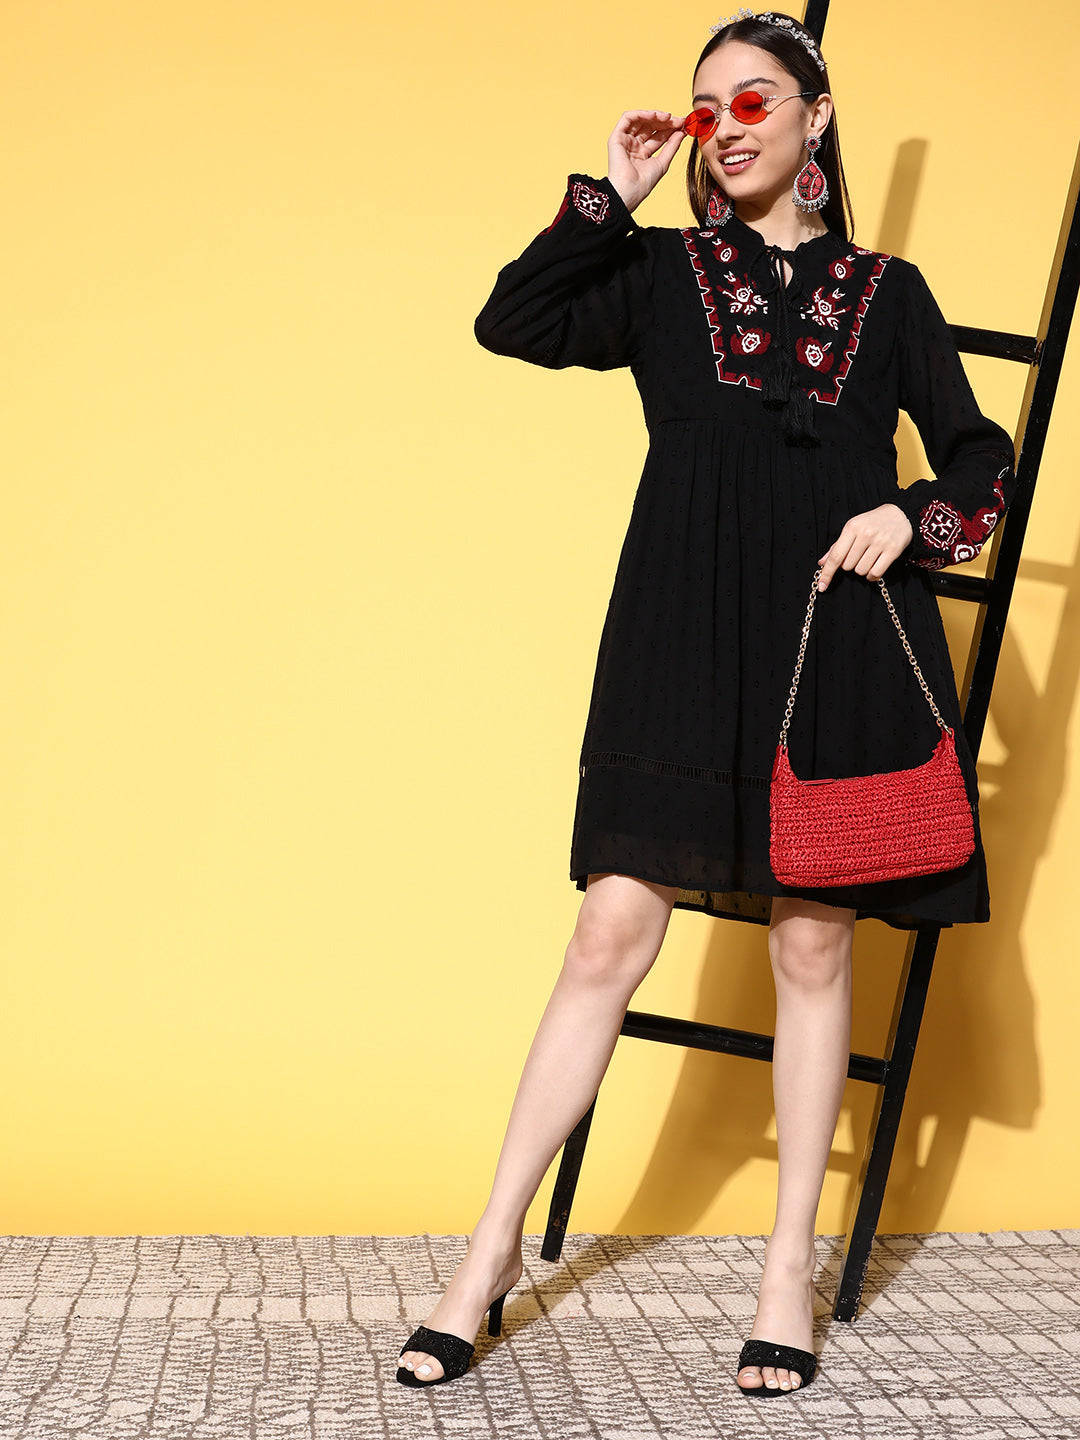 Ishin Women's Cotton Black Embroidered A-Line Dress